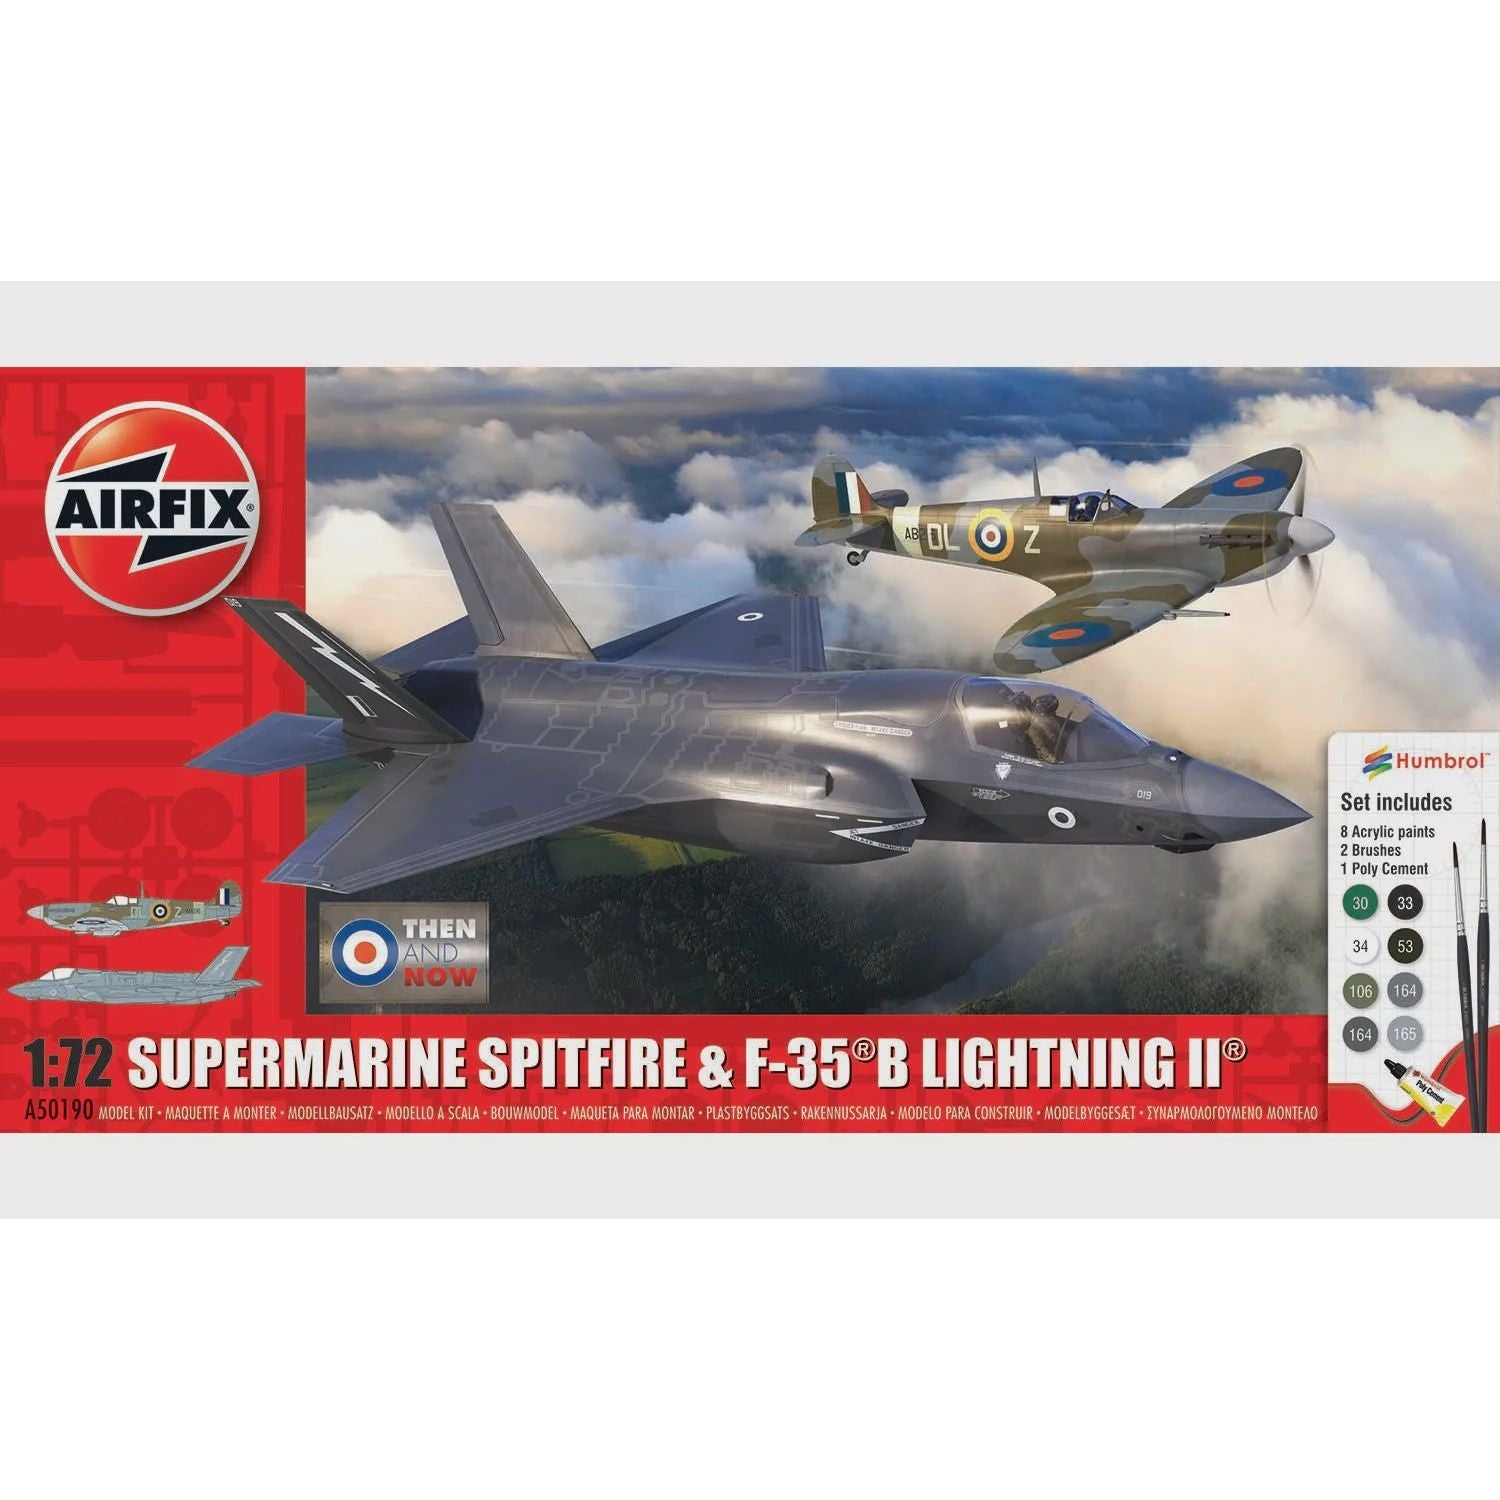 Supermarine Spitfire & F35B Lightning II Then & Now 1/72 #50190 by Airfix